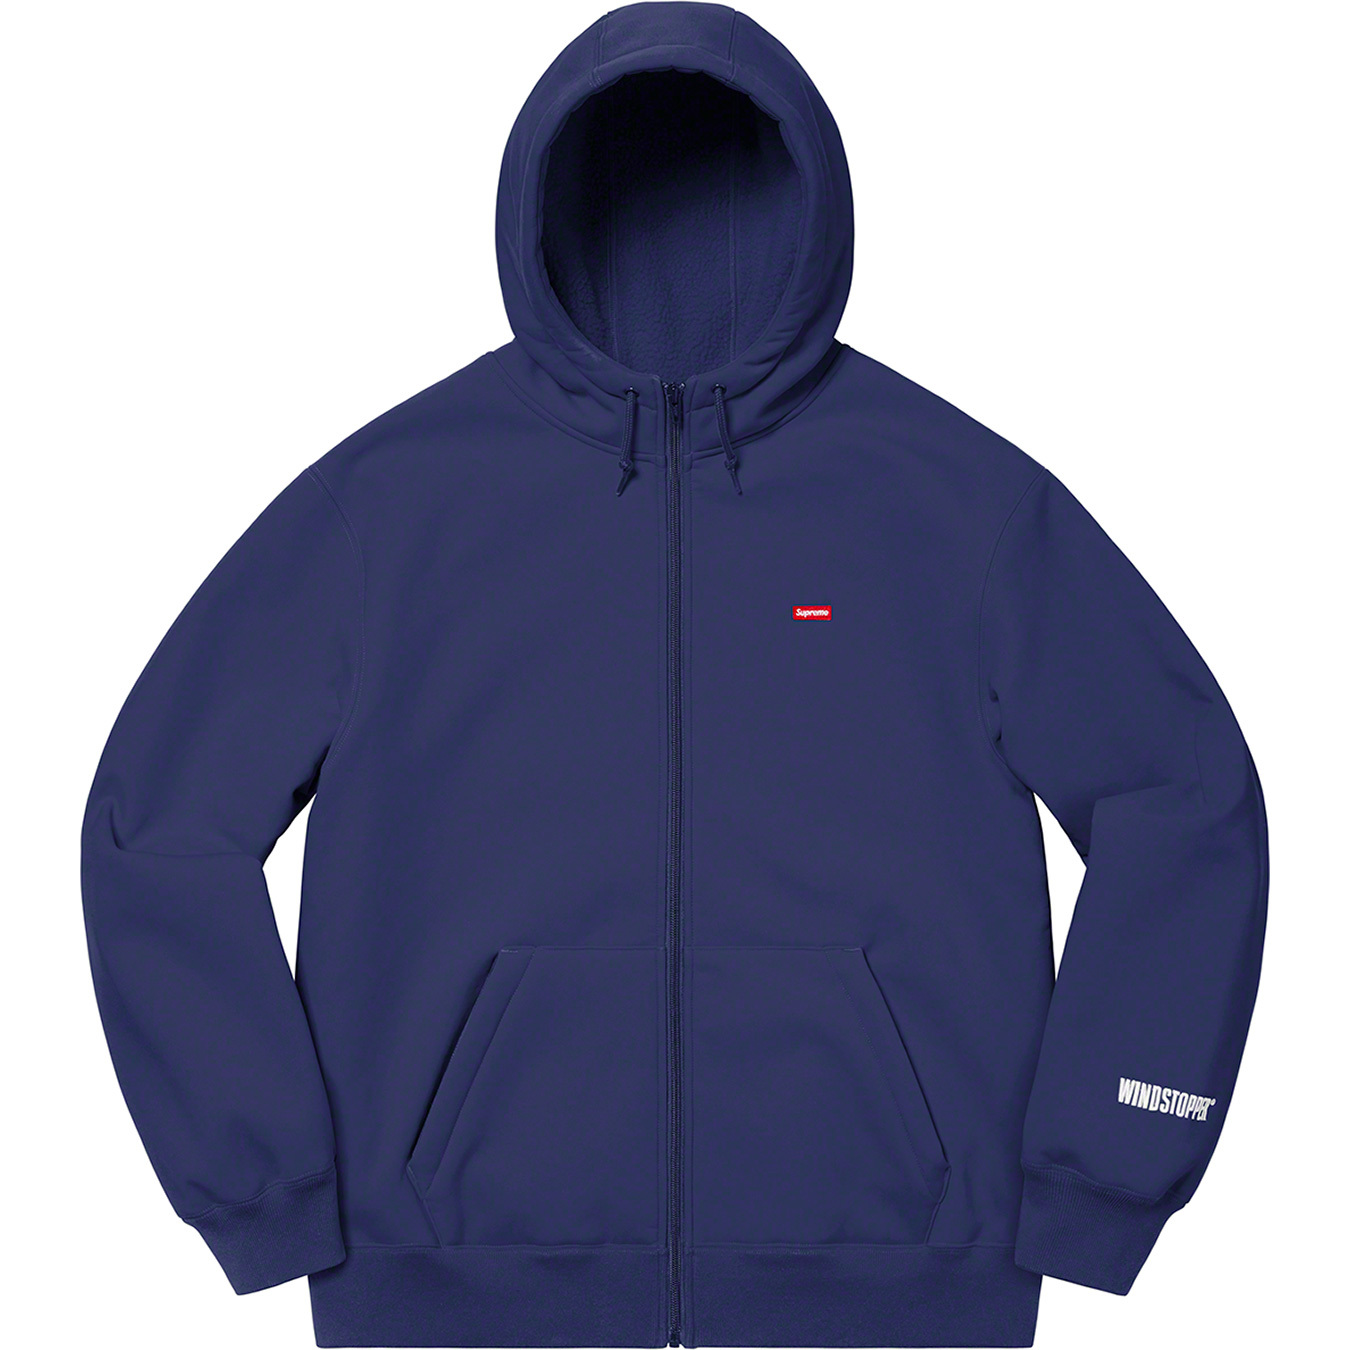 WINDSTOPPER Zip Up Hooded Sweatshirt - fall winter 2020 - Supreme